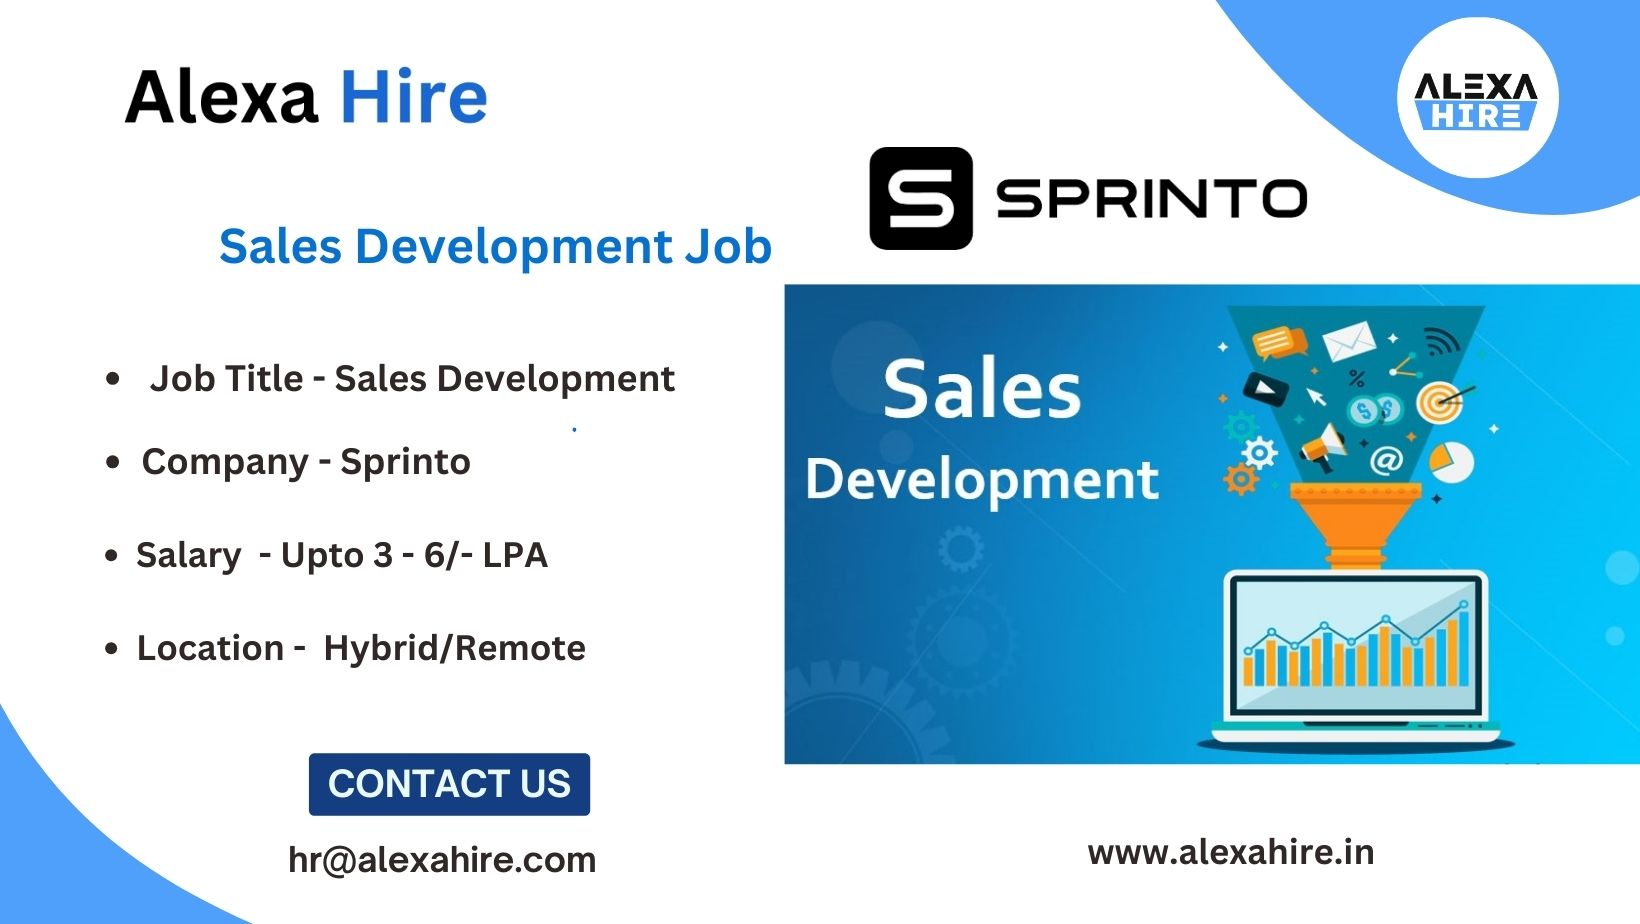 Sales Development Job at Sprinto Best Opportunity